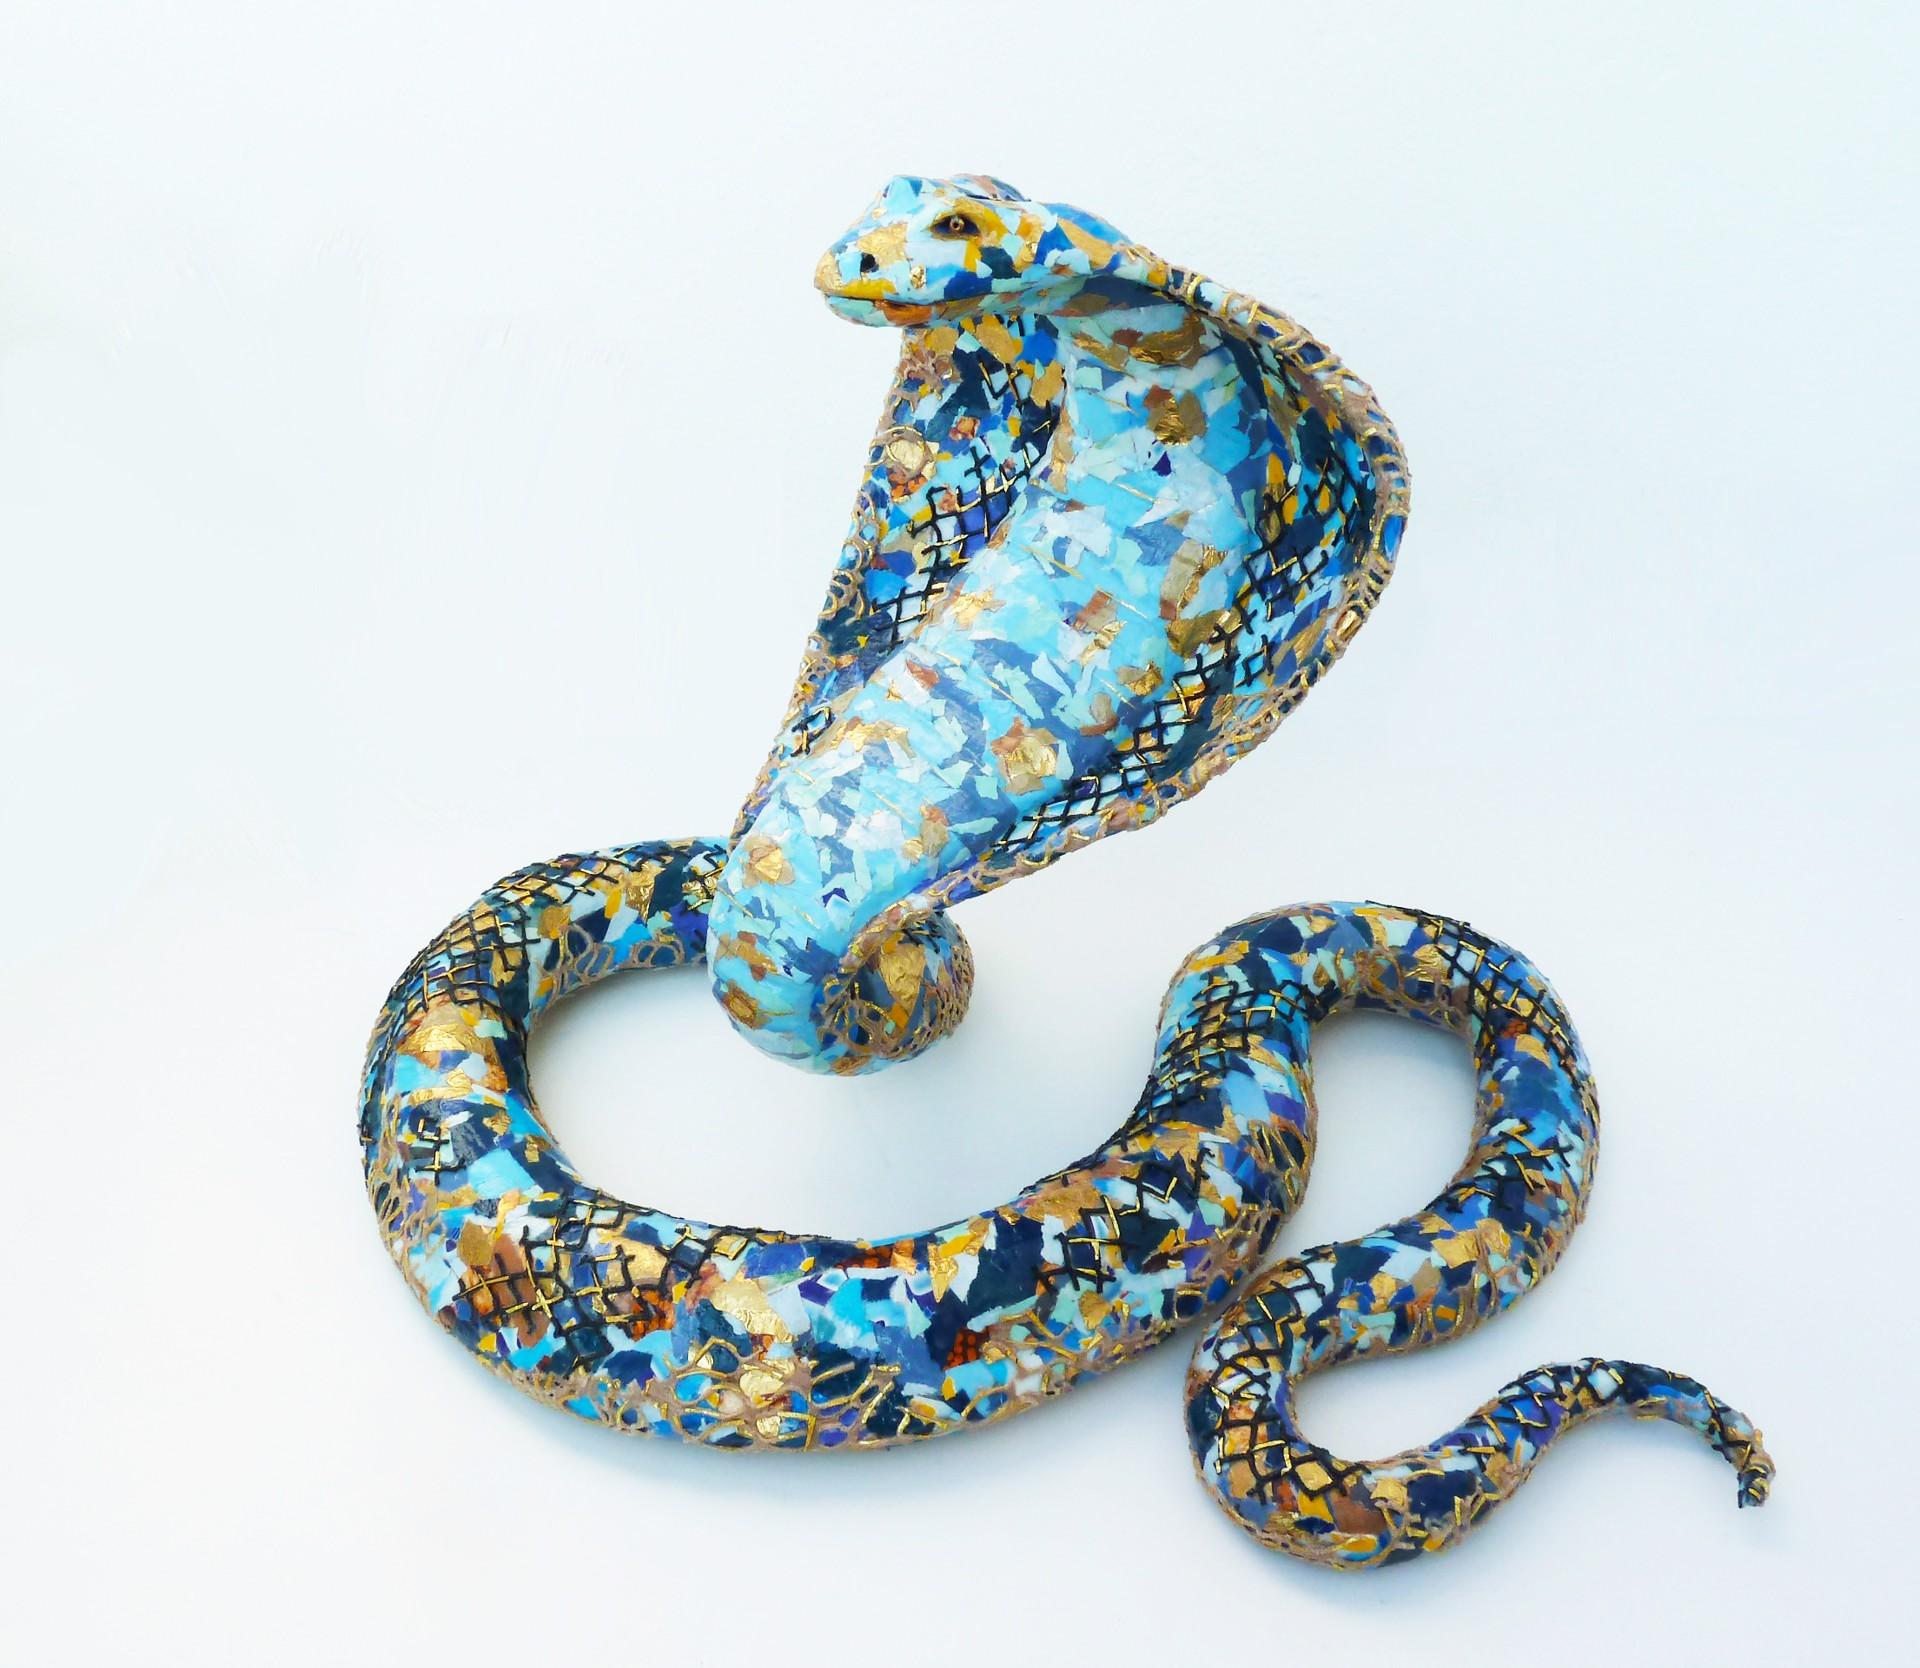 Kara the Cobra - Contemporary Snake Sculpture Upcylced Materials  (Blau + Gold) – Mixed Media Art von Yulia Shtern